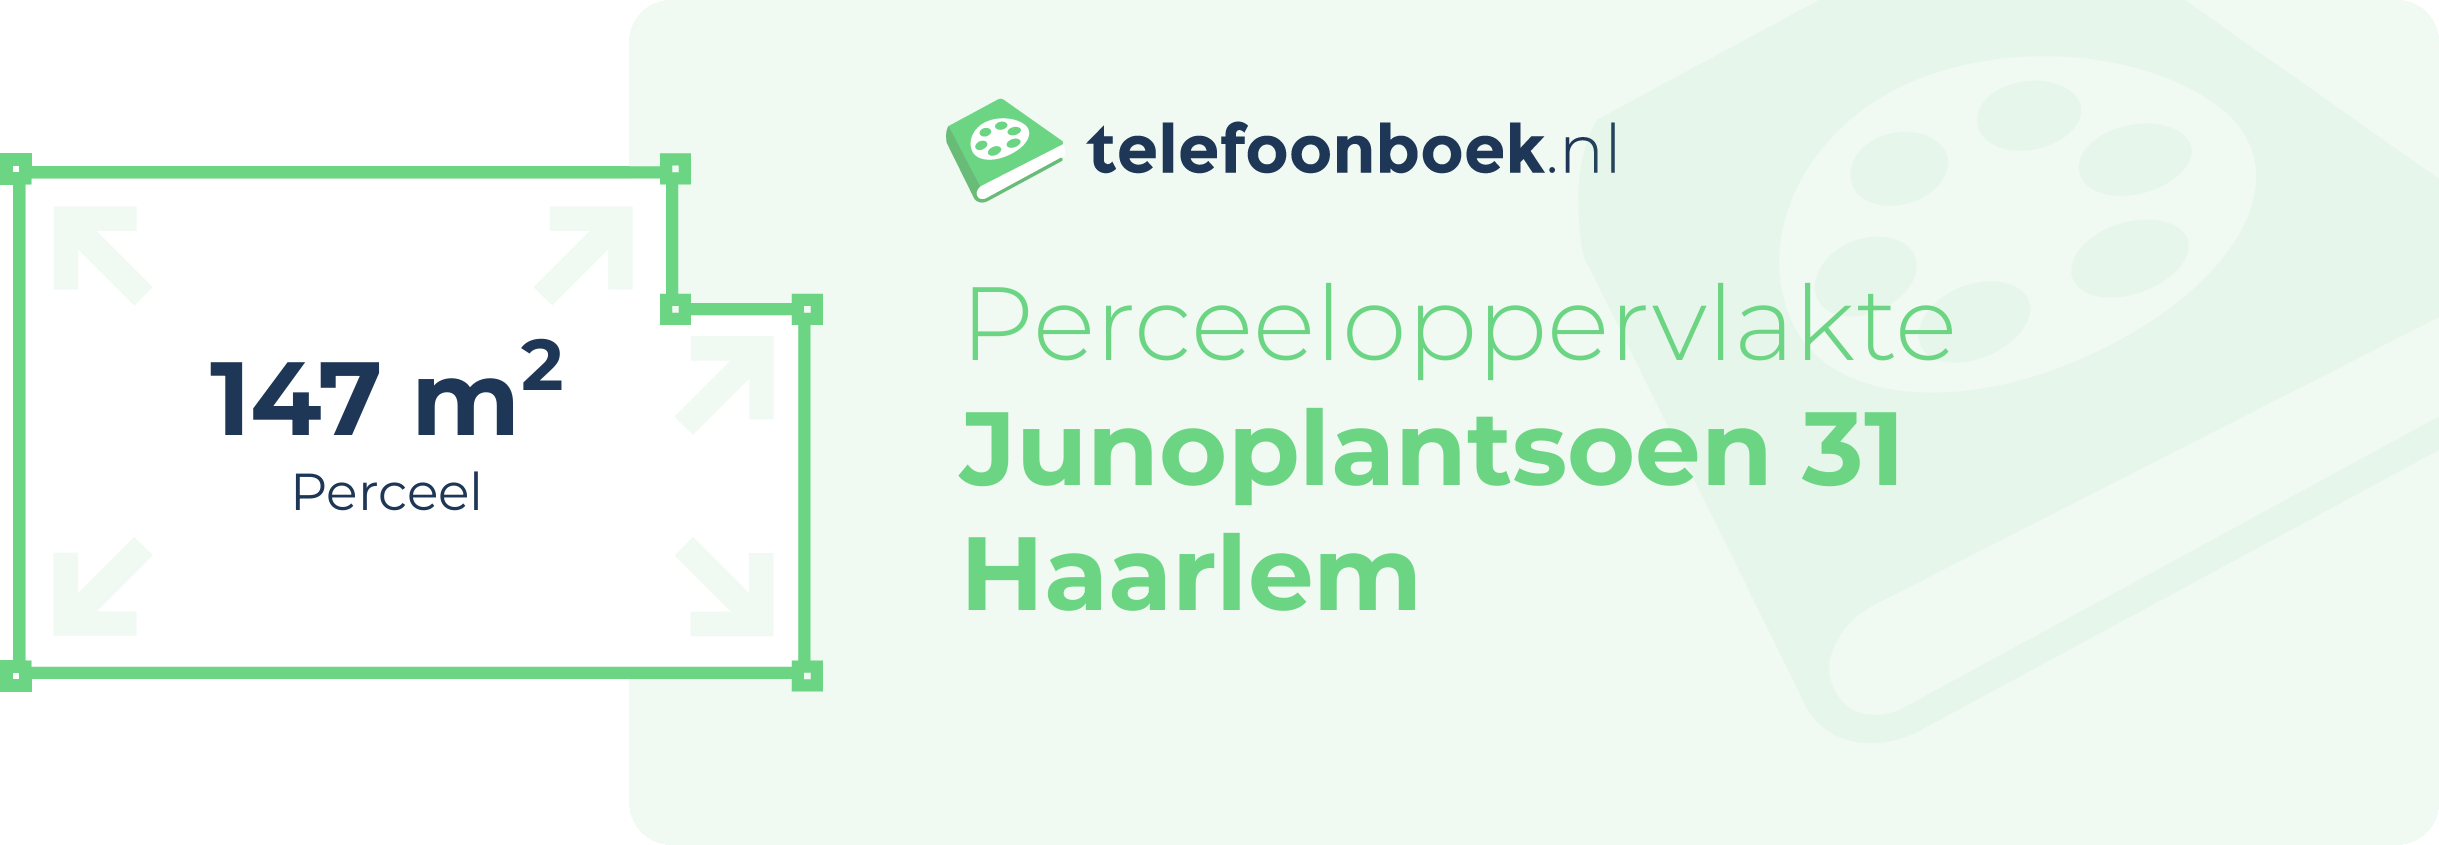 Perceeloppervlakte Junoplantsoen 31 Haarlem